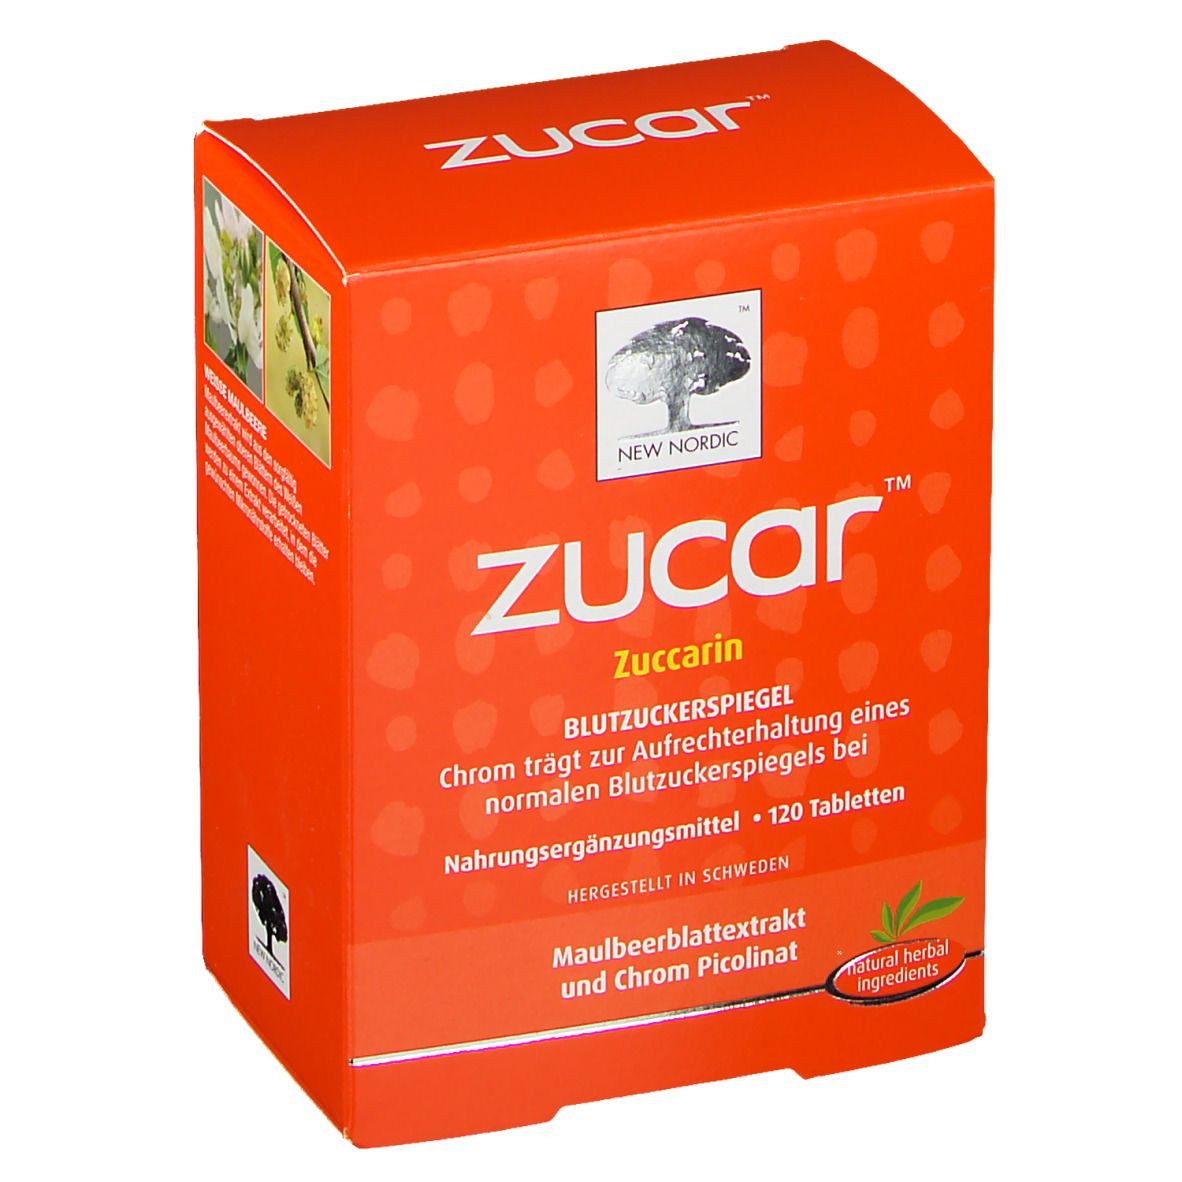 Zucar Zuccarin tablets